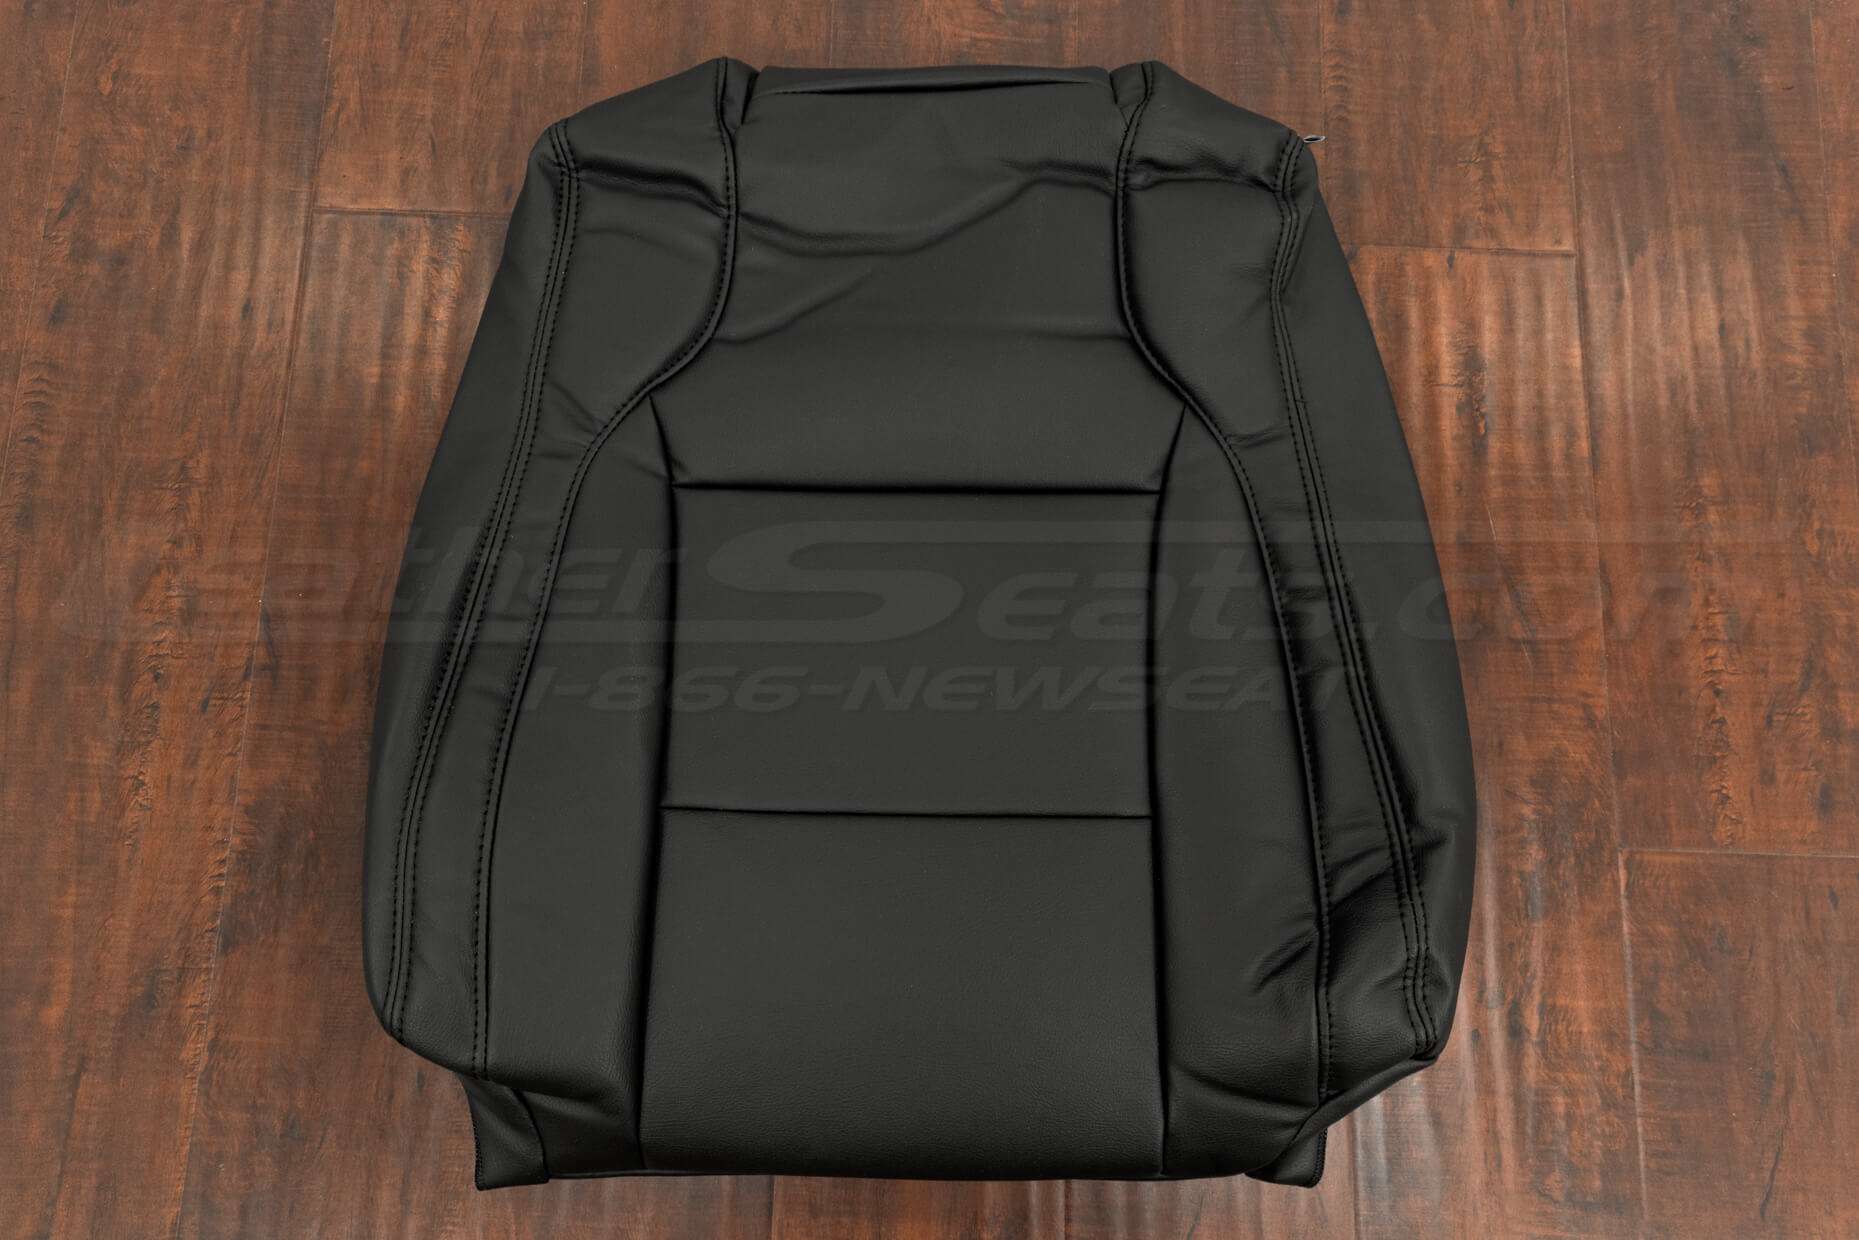 Ford Taurus Leather Upholstery Kit - Black - Front backrest